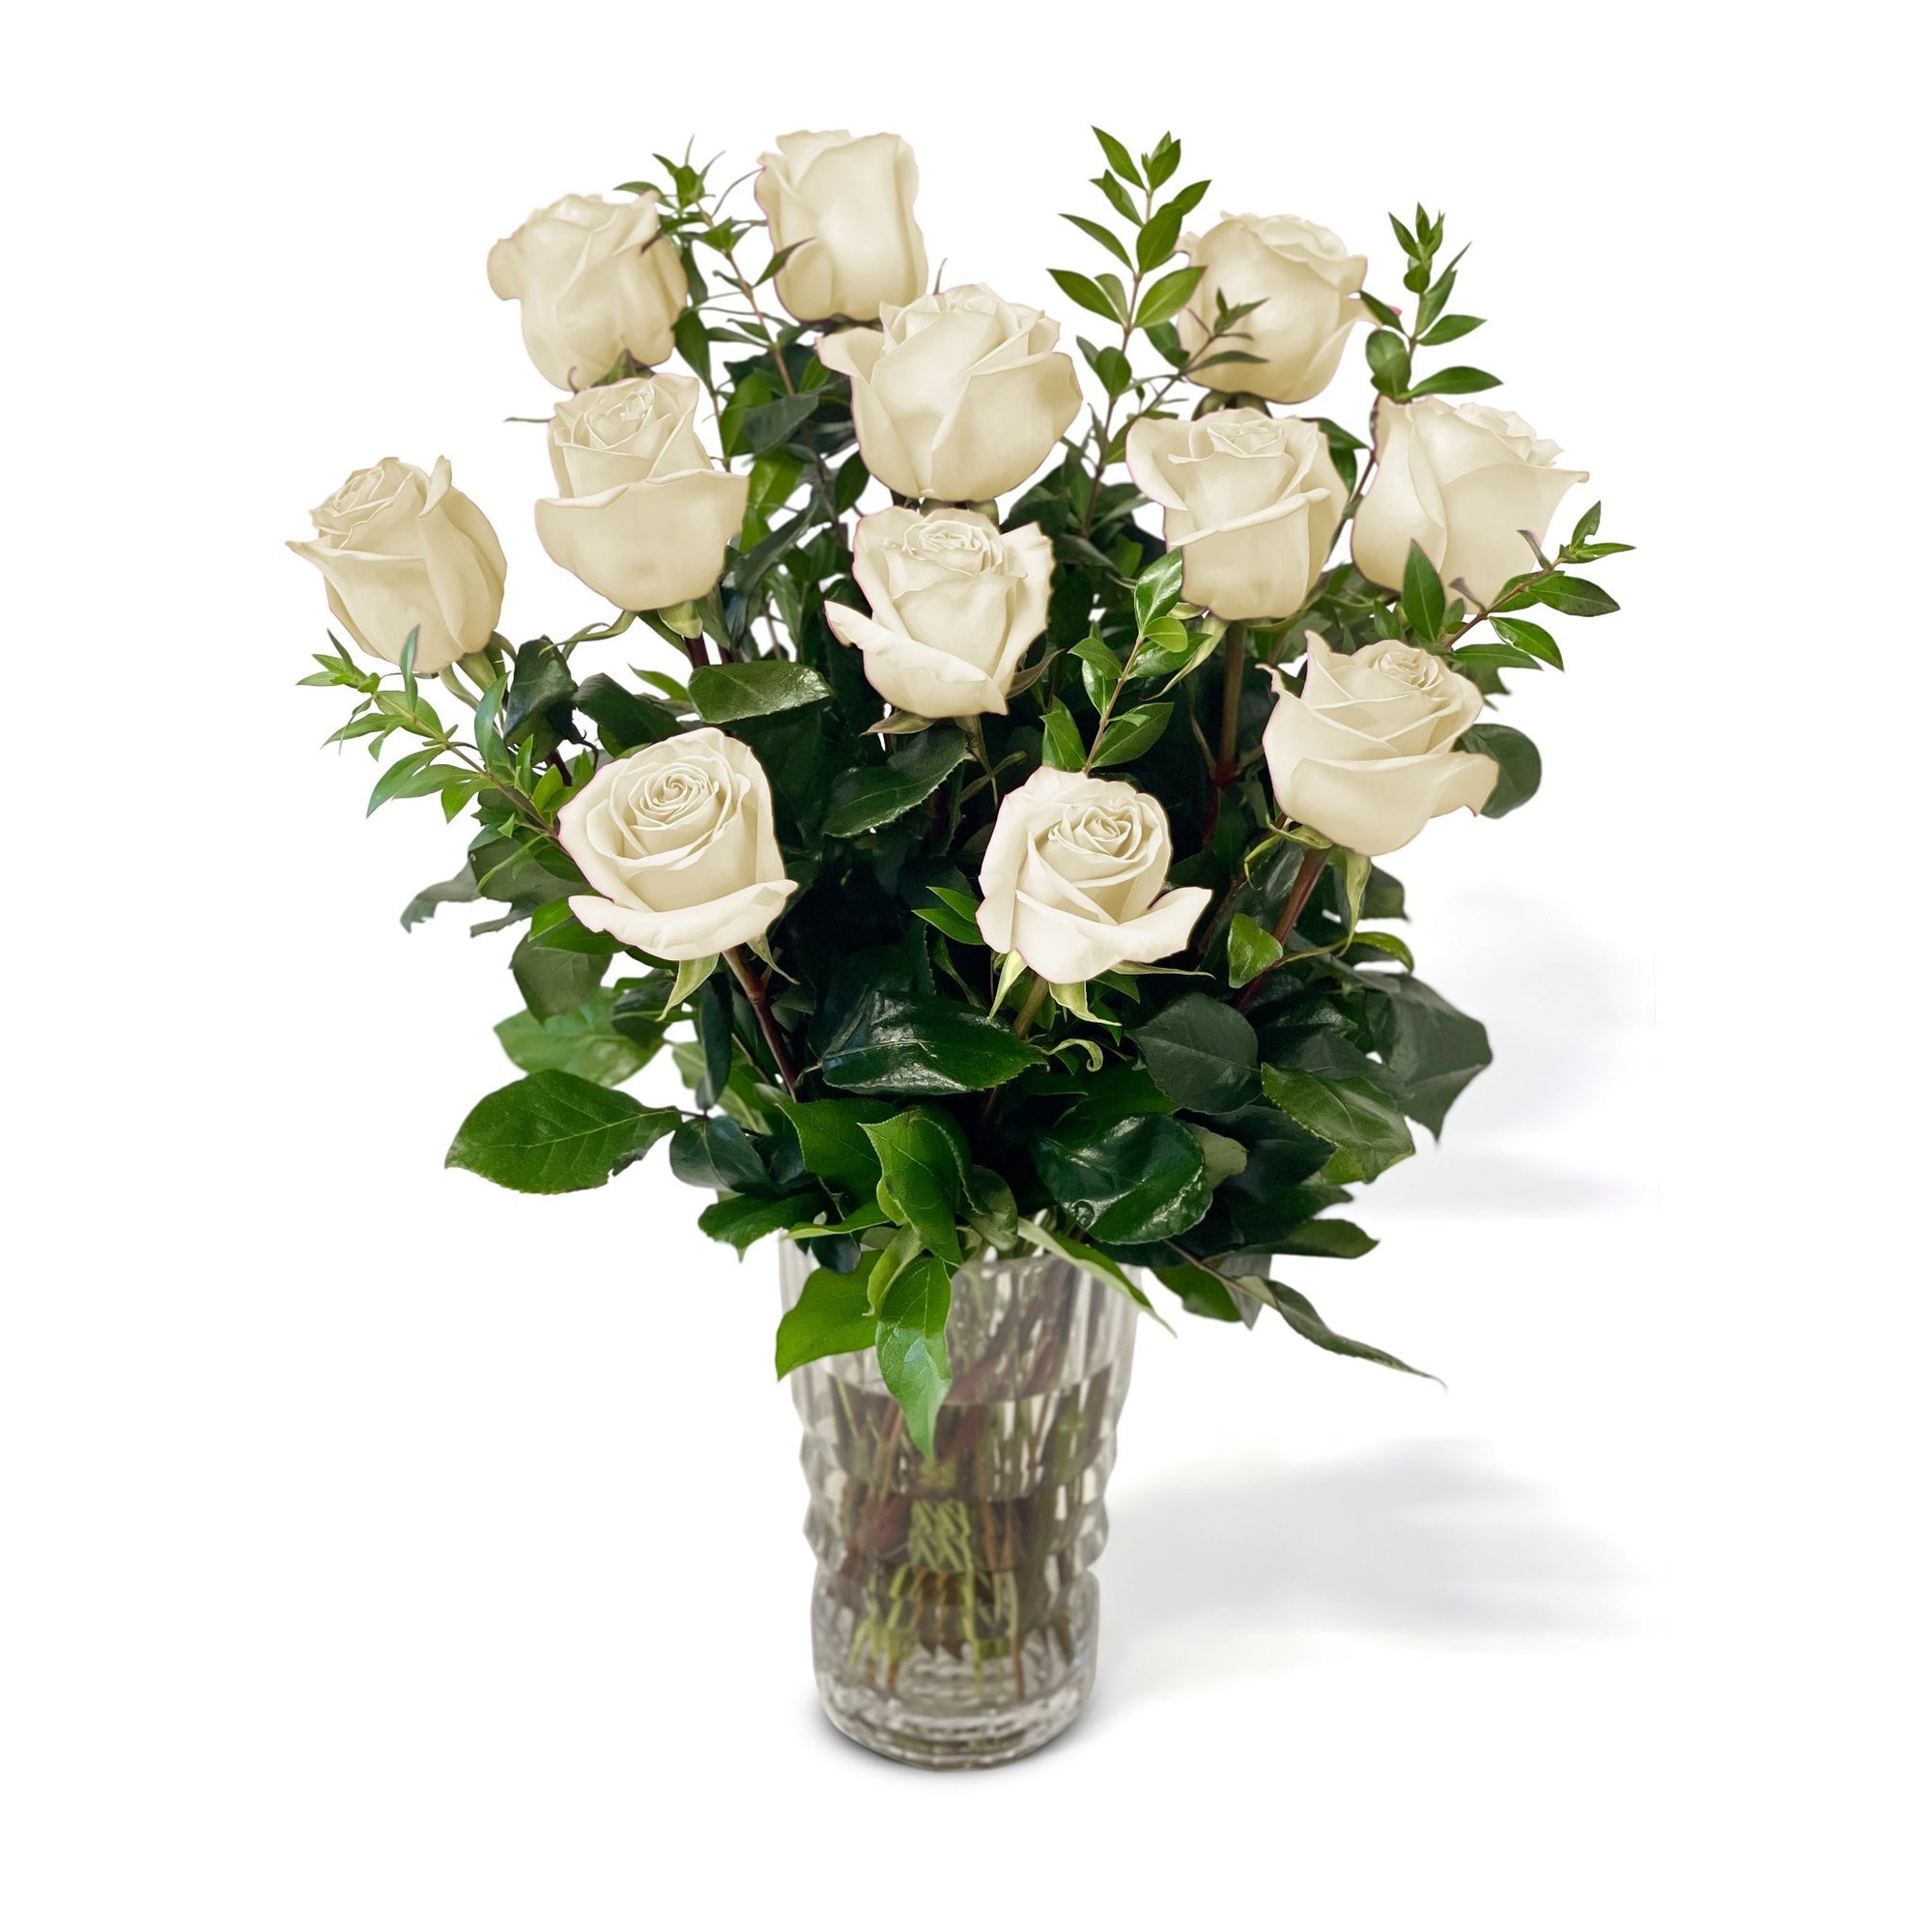 Manhattan Flower Delivery - Fresh Roses in a Crystal Vase | Dozen White - Roses